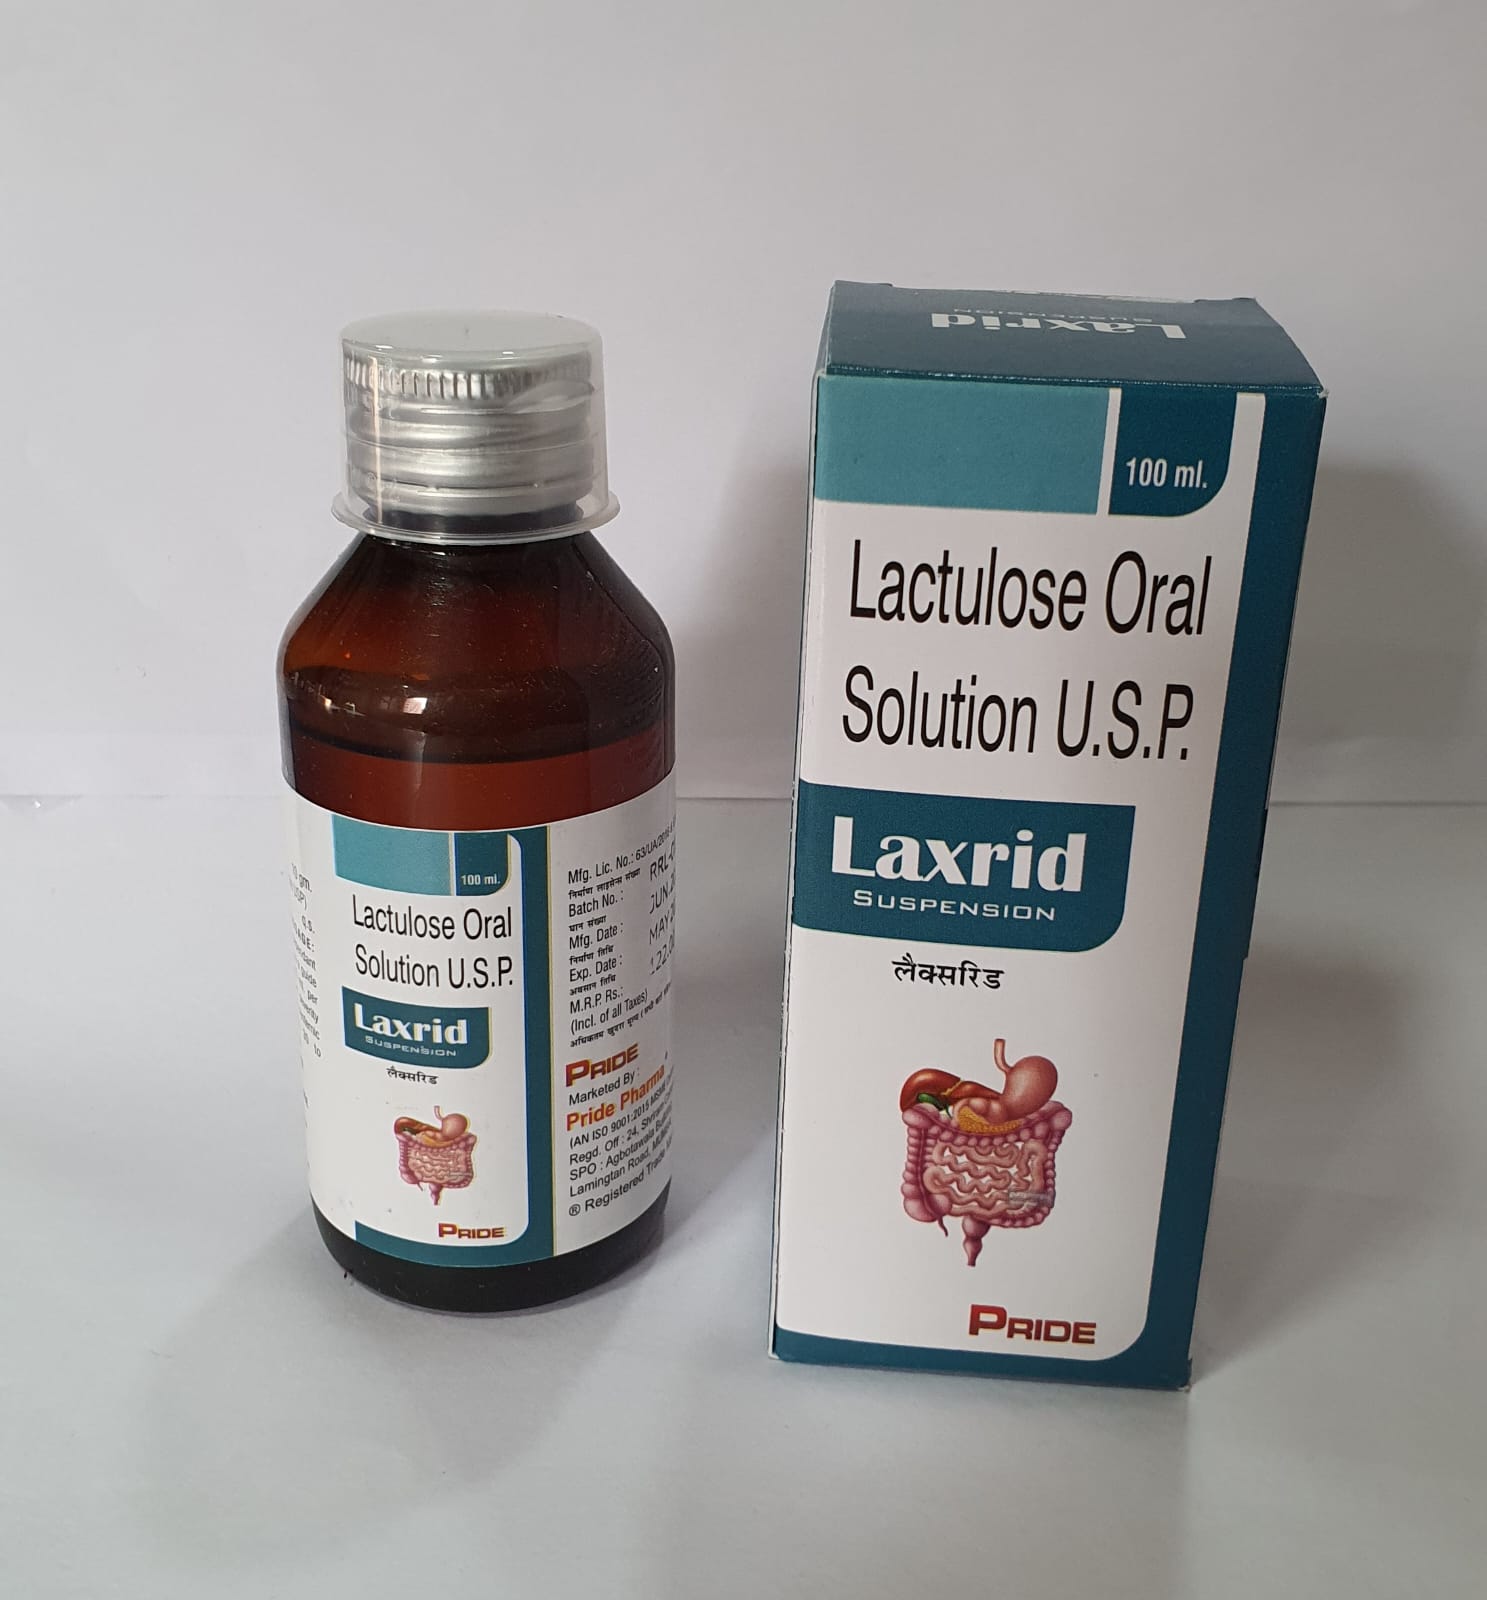 Product Name: Laxrid , Compositions of Laxrid  are Lactulose Oral Solution U.S.P. - Pride Pharma